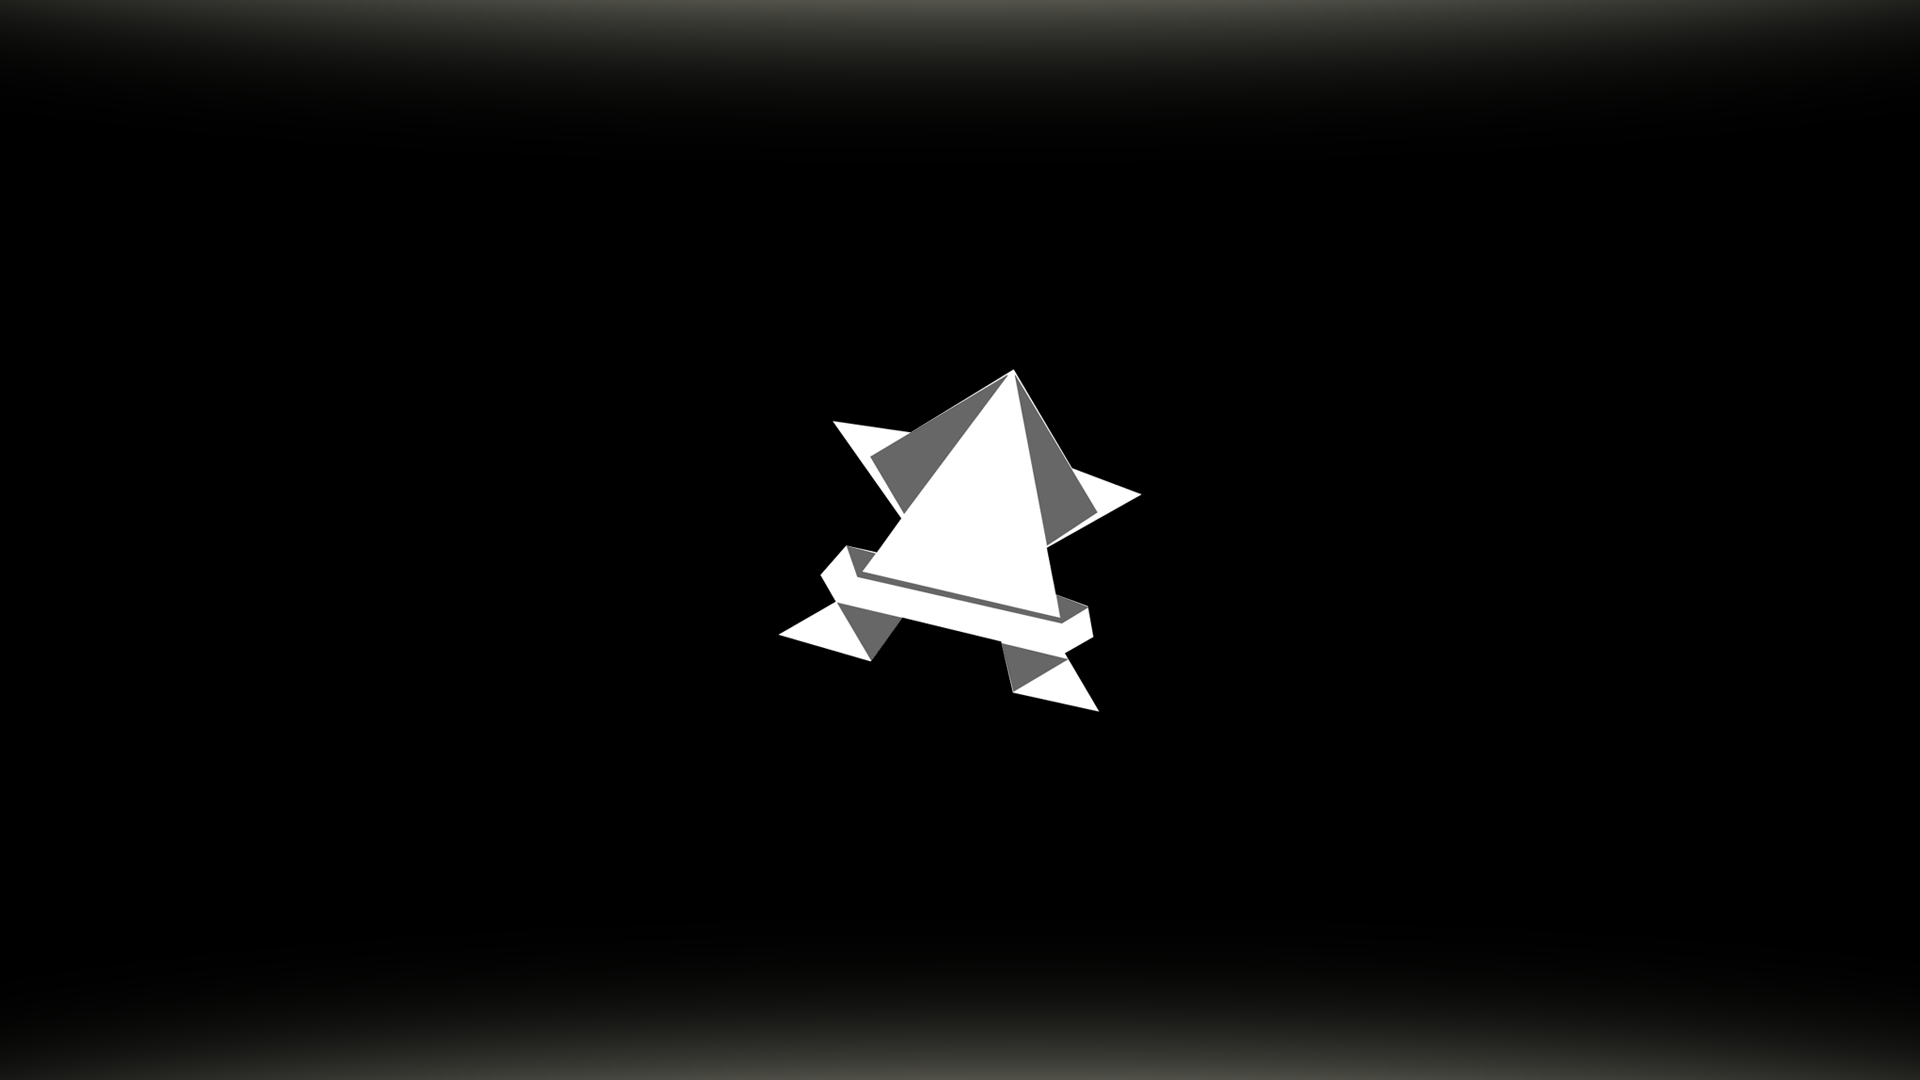 Icon for Origami Beginner